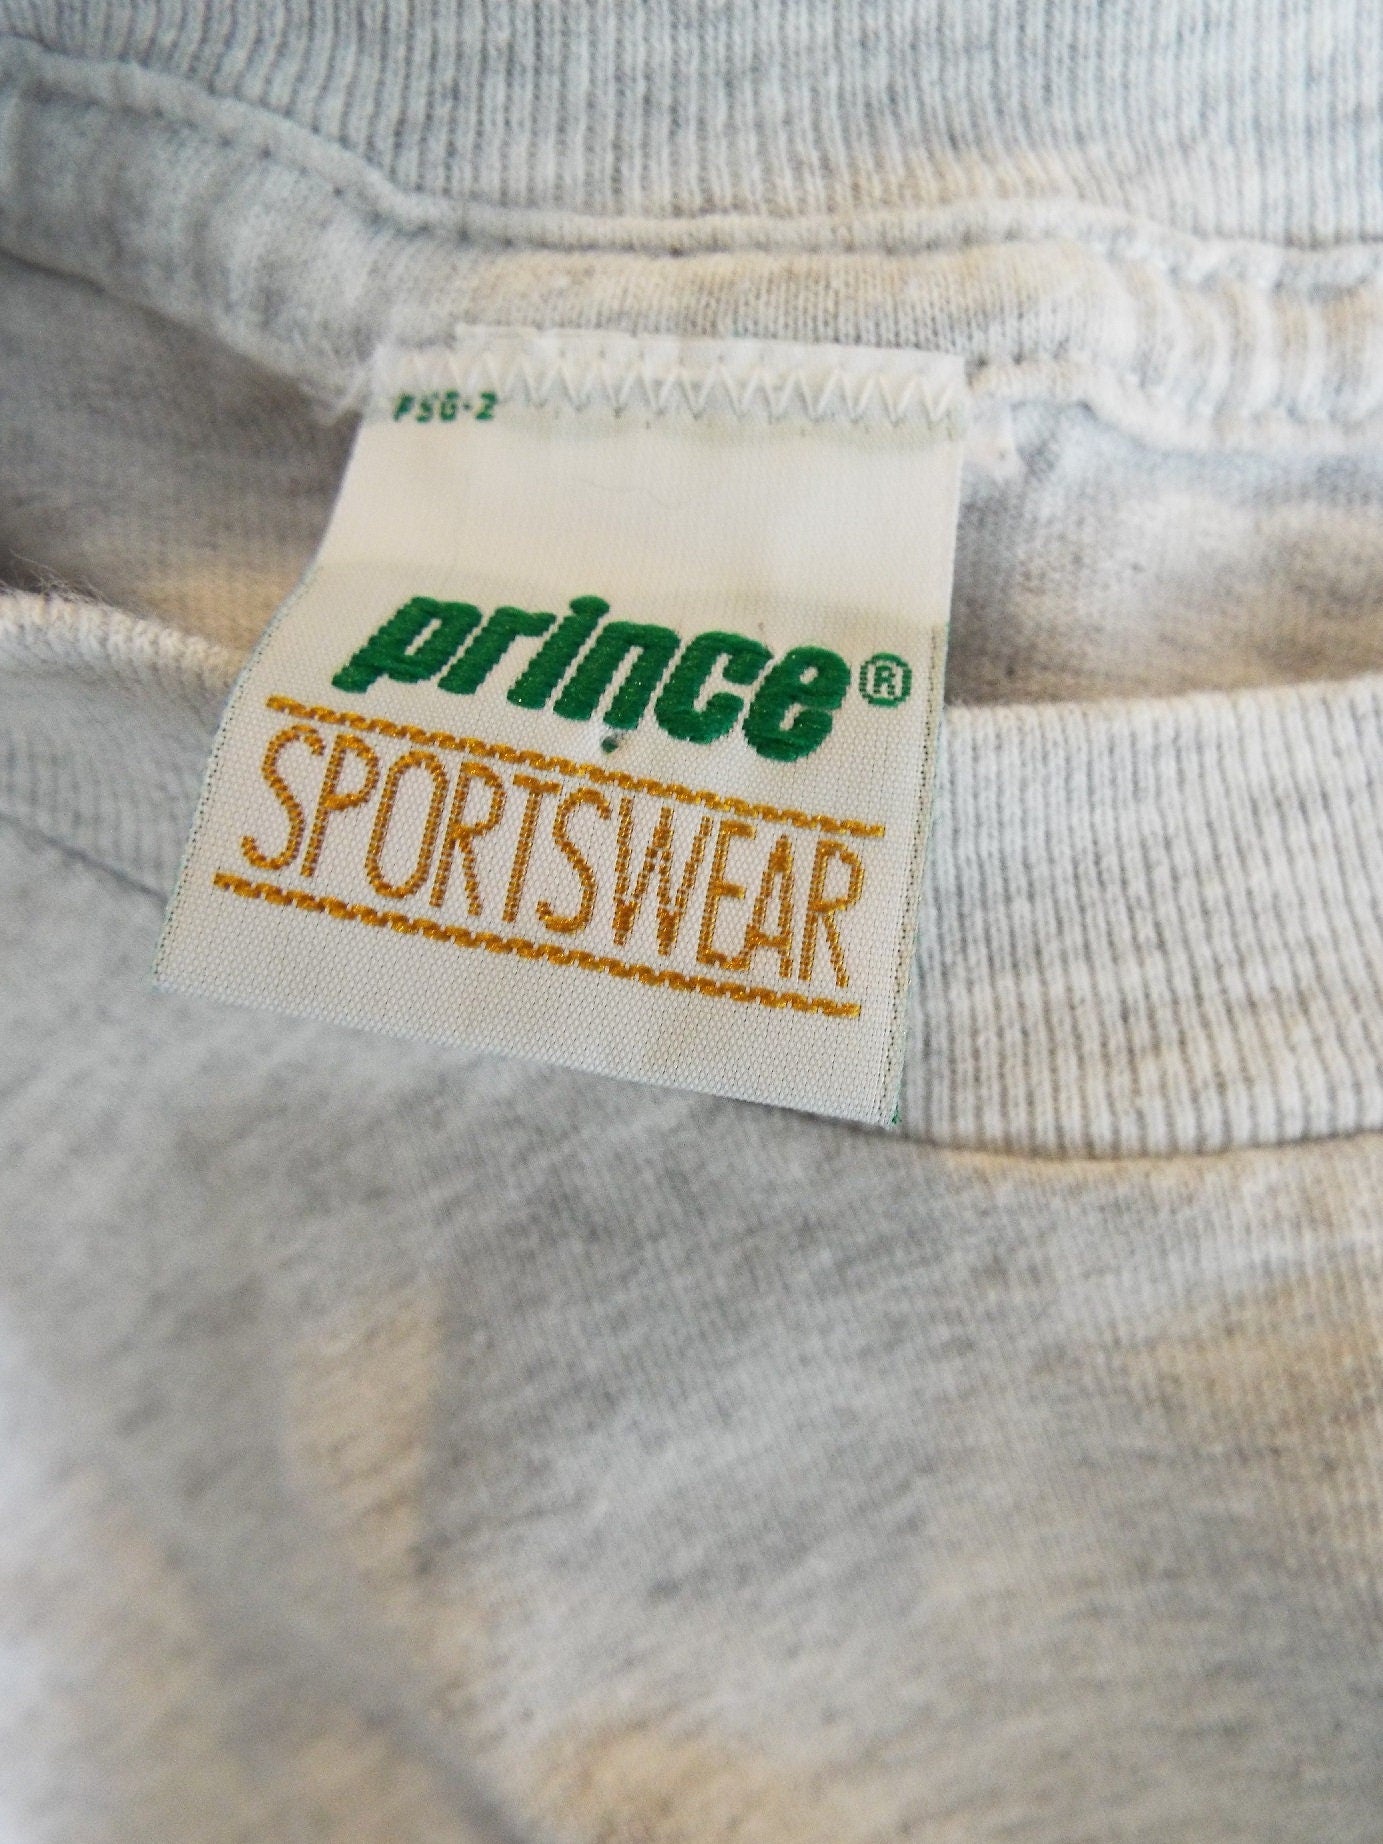 Vintage Prince Tennis T Shirt